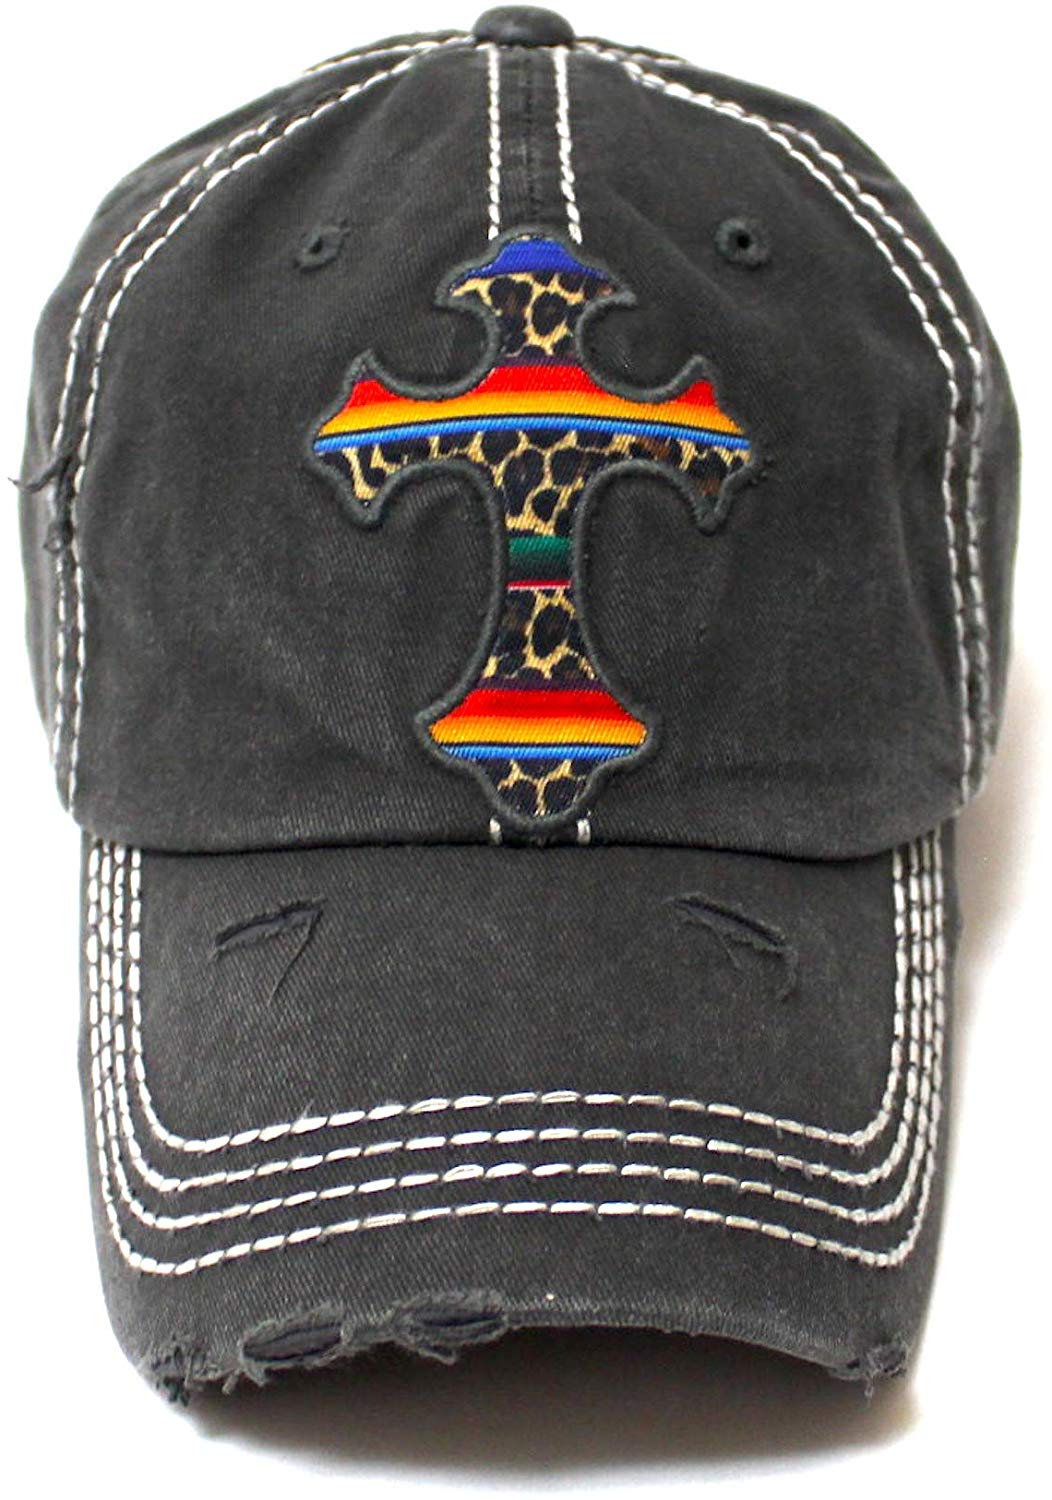 Classic Distressed Ballcap Christian Cross Monogram Embroidery, Serape Leopard Patterned Adjustable Hat, Vintage Blk - Caps 'N Vintage 